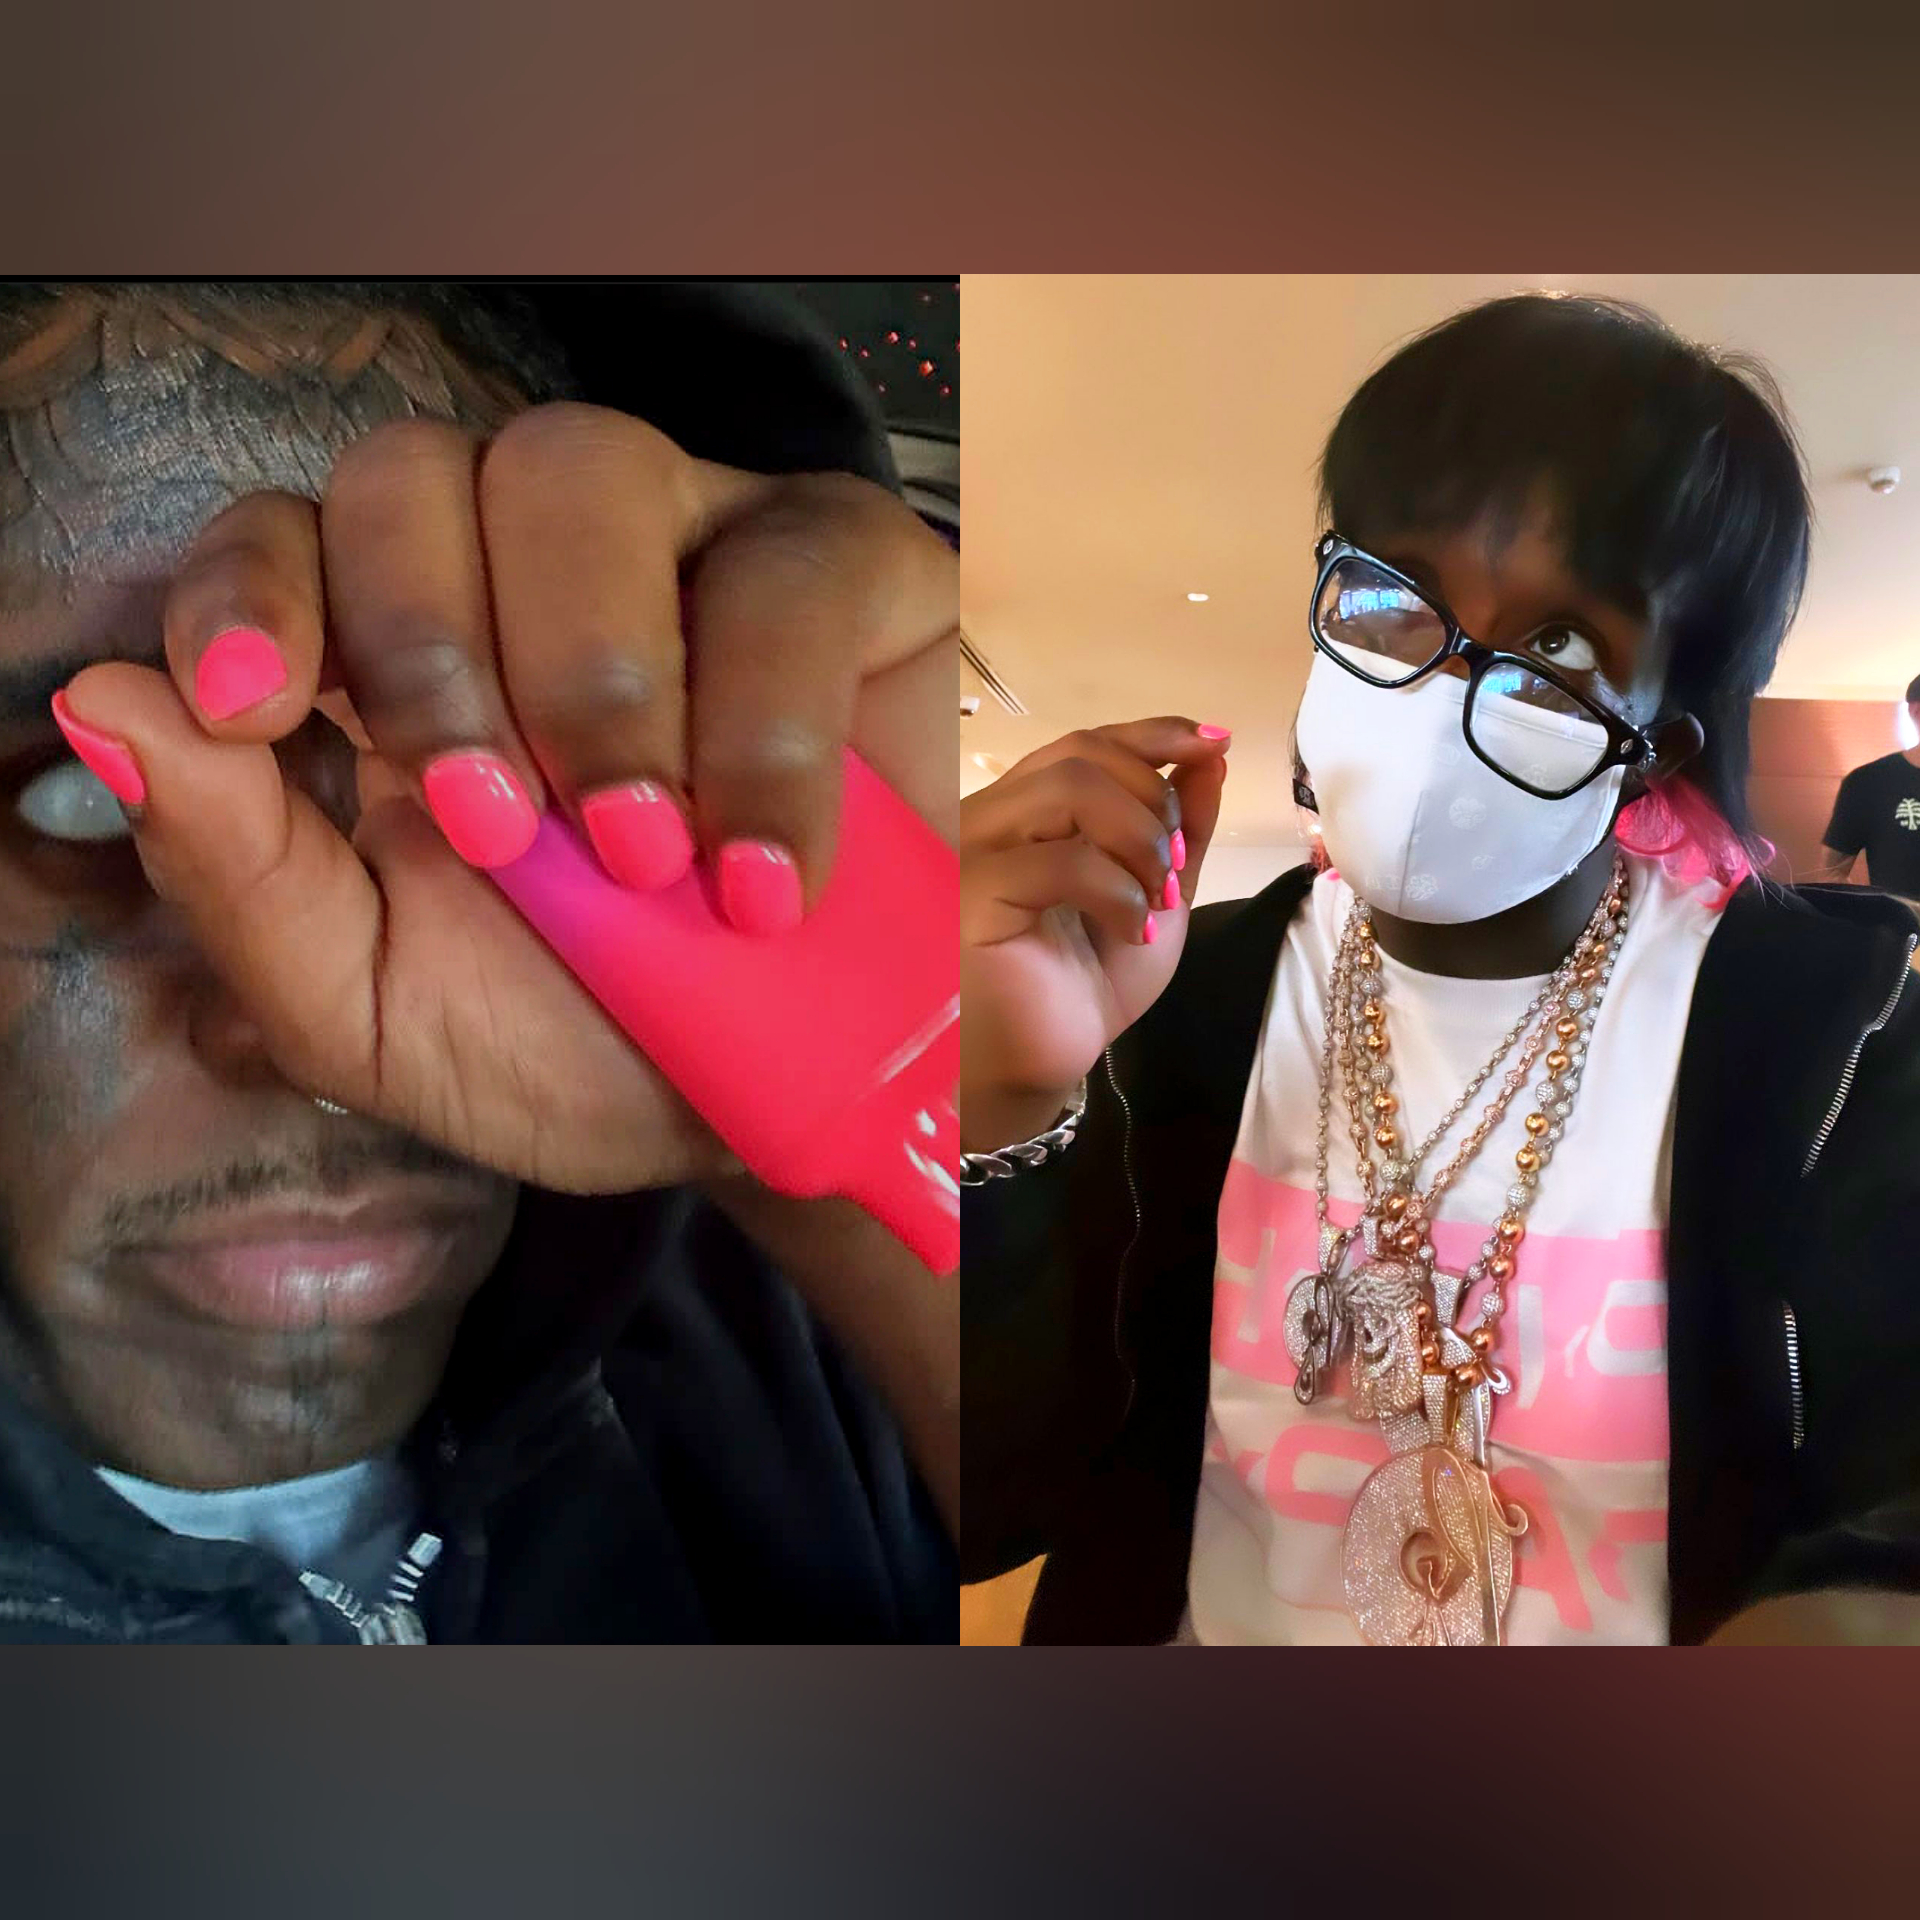 Rapper LilUziVert shows off pink nails